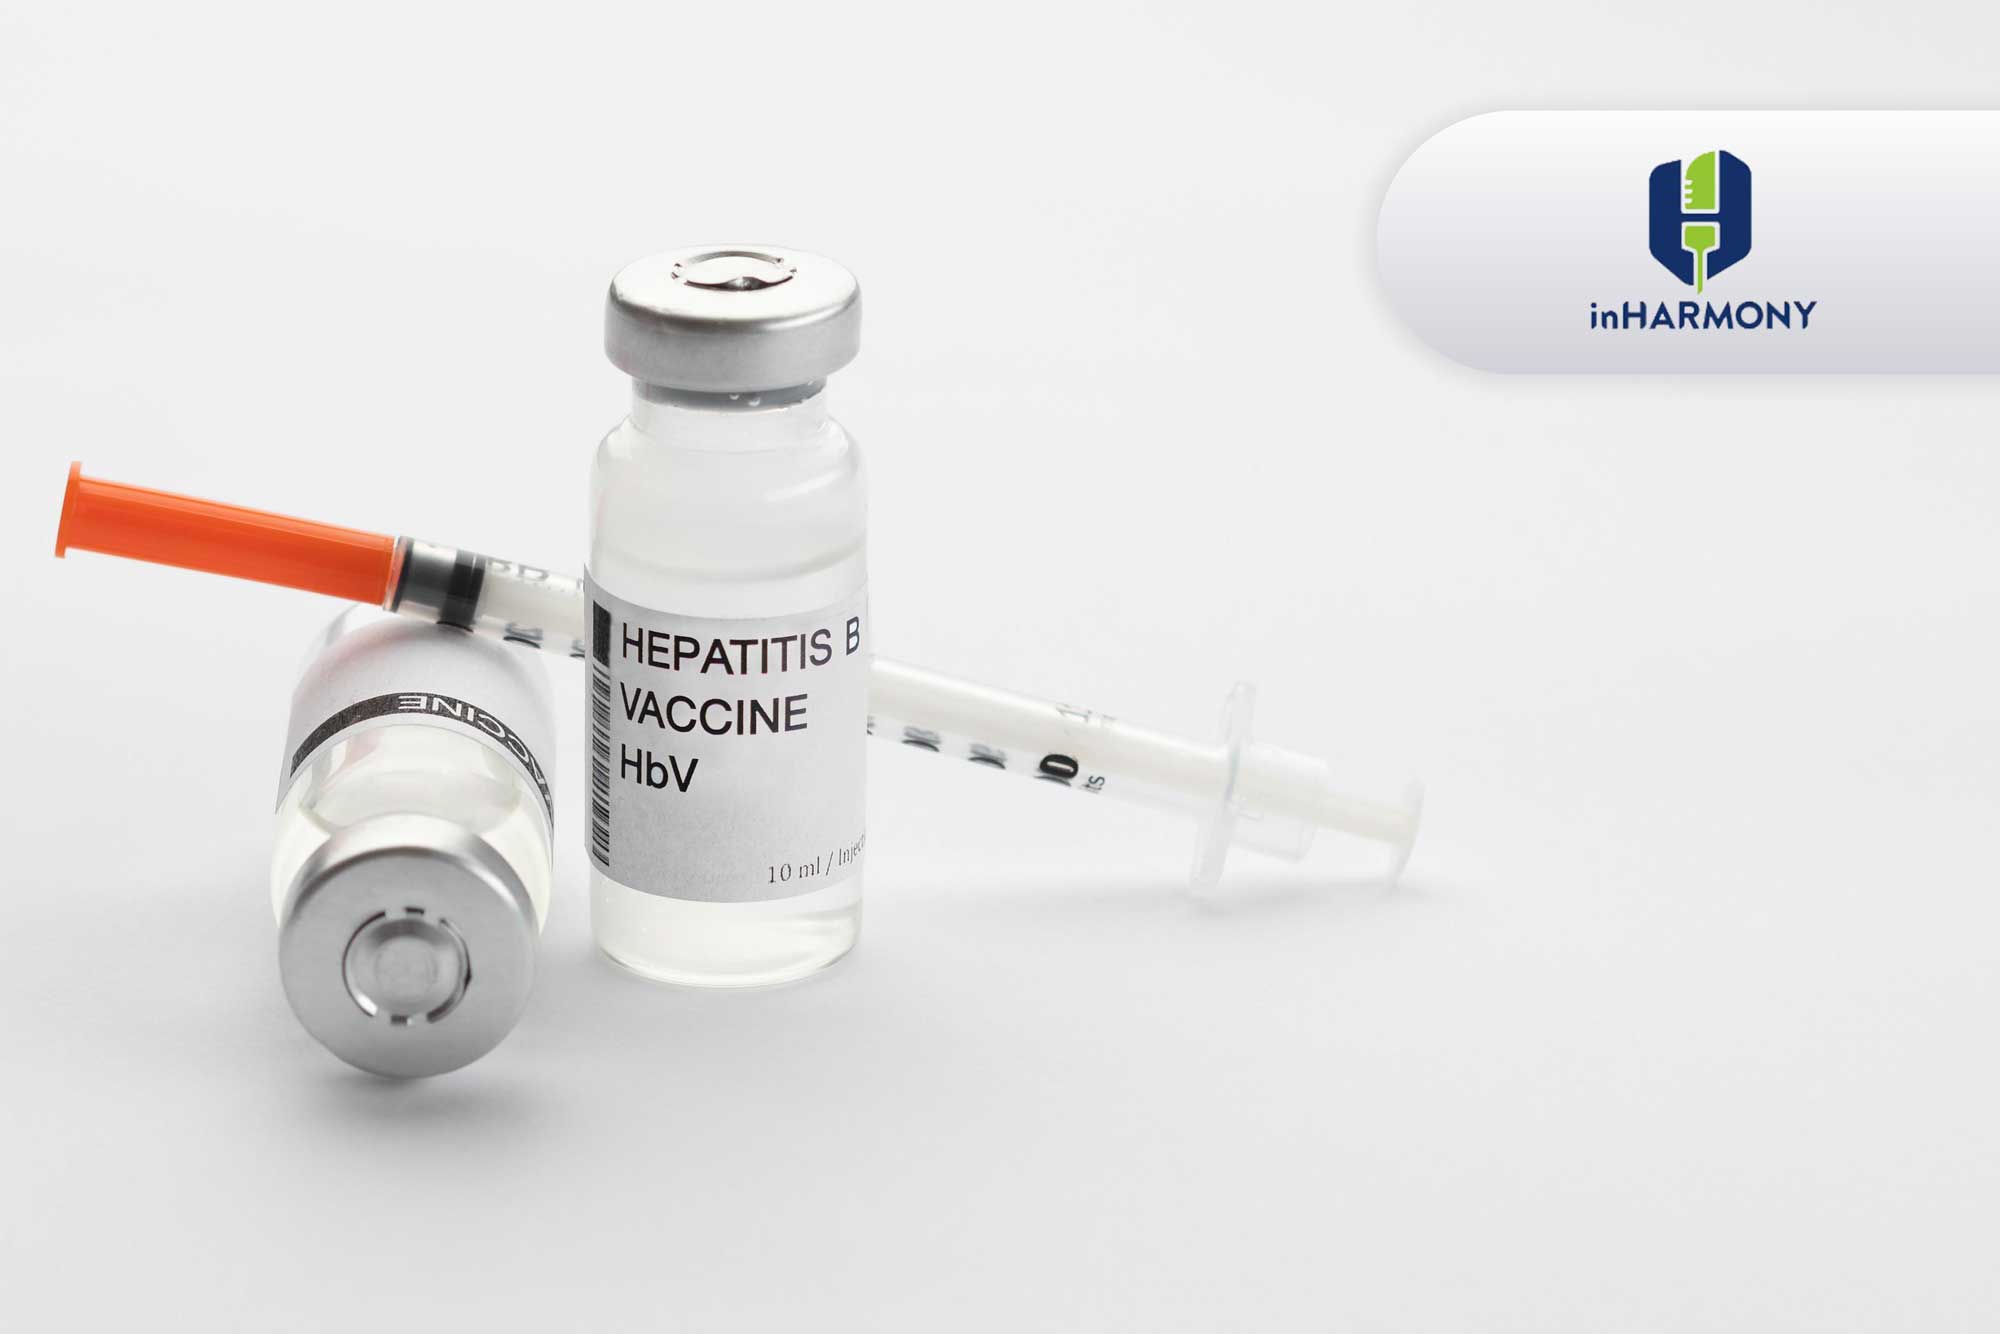 vaksin-hepatitis-B-inharmony_1691391549.jpg